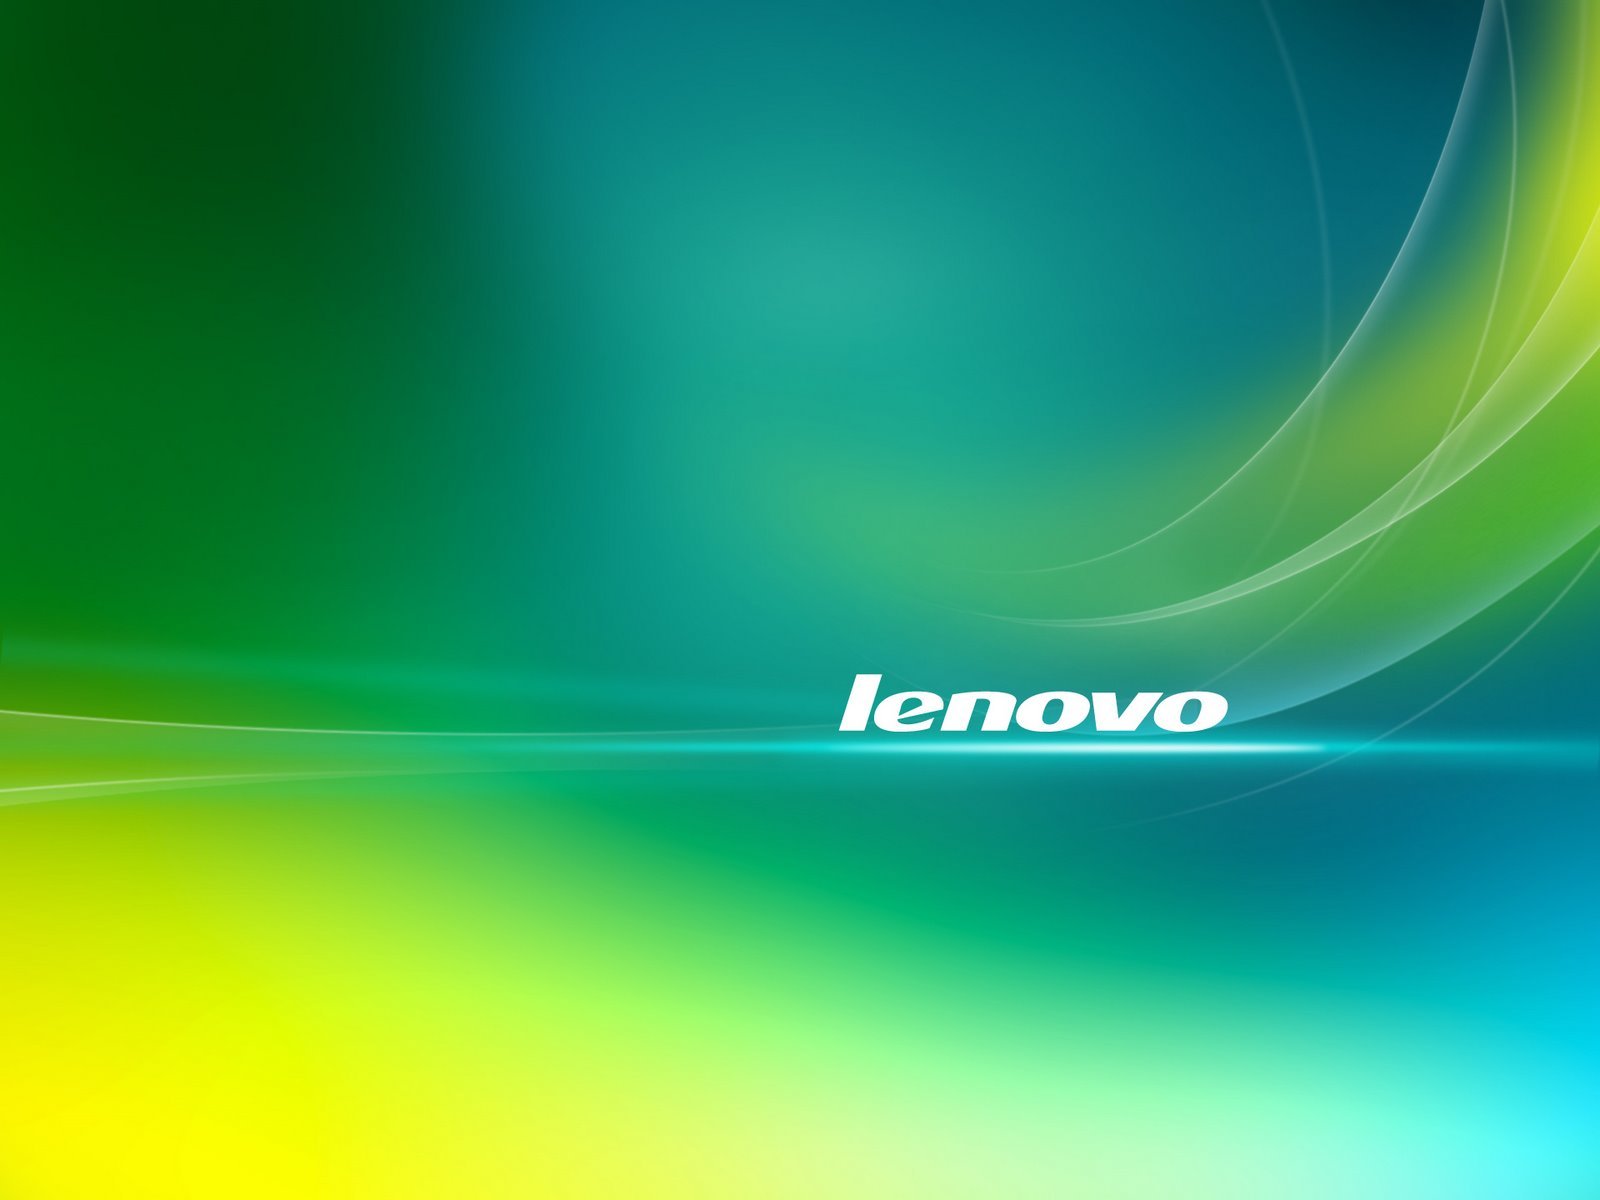  Lenovo Technology Free Wallpaper 1600x1200 Full HD Wallpapers